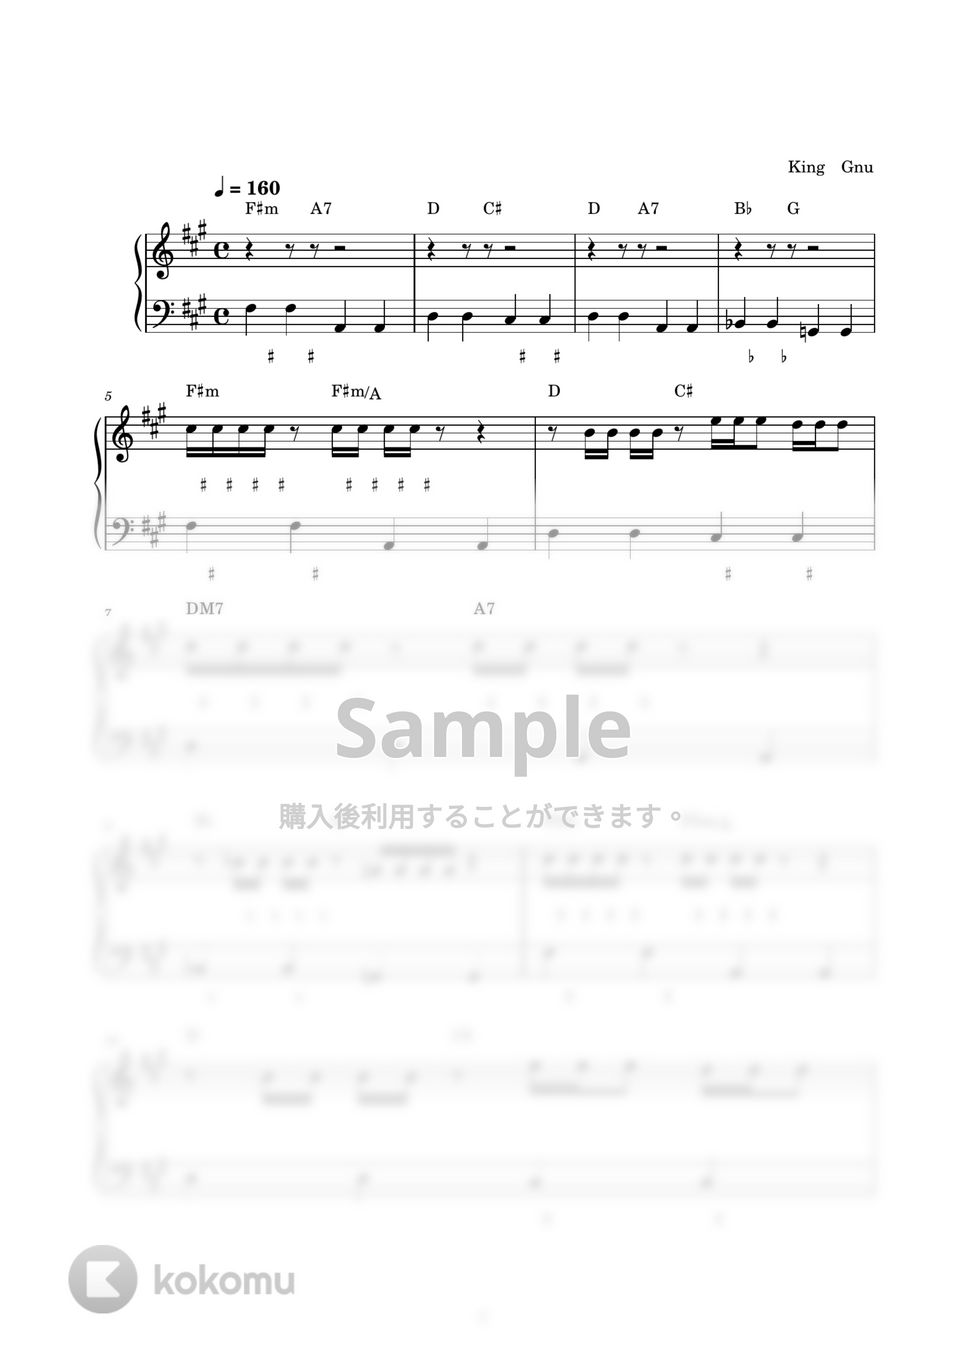 King Gnu - 一途 (ピアノ楽譜 / かんたん両手 / 歌詞付き / ドレミ付き / 初心者向き) by piano.tokyo